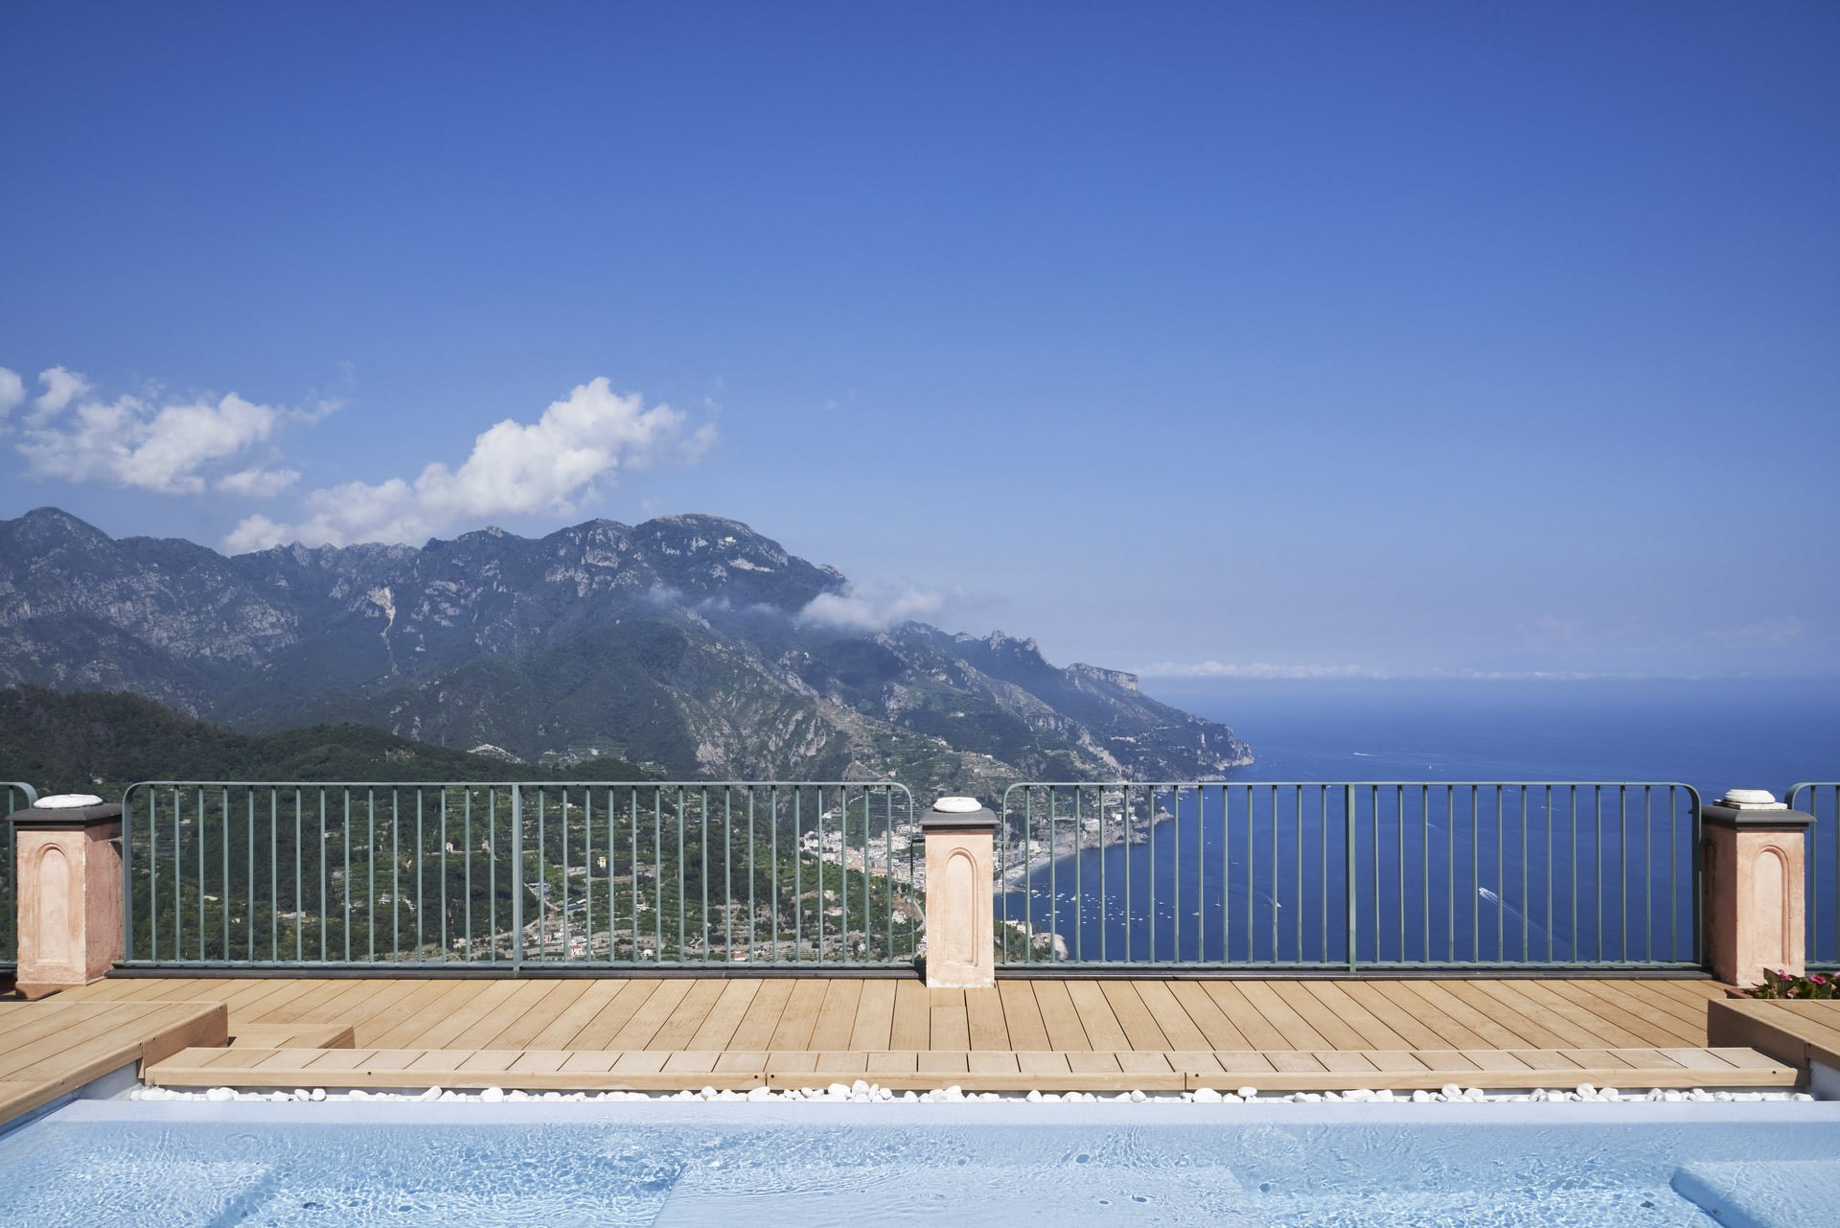 Palazzo Avino Amalfi Coast Hotel - Ravello, Italy - Pool View